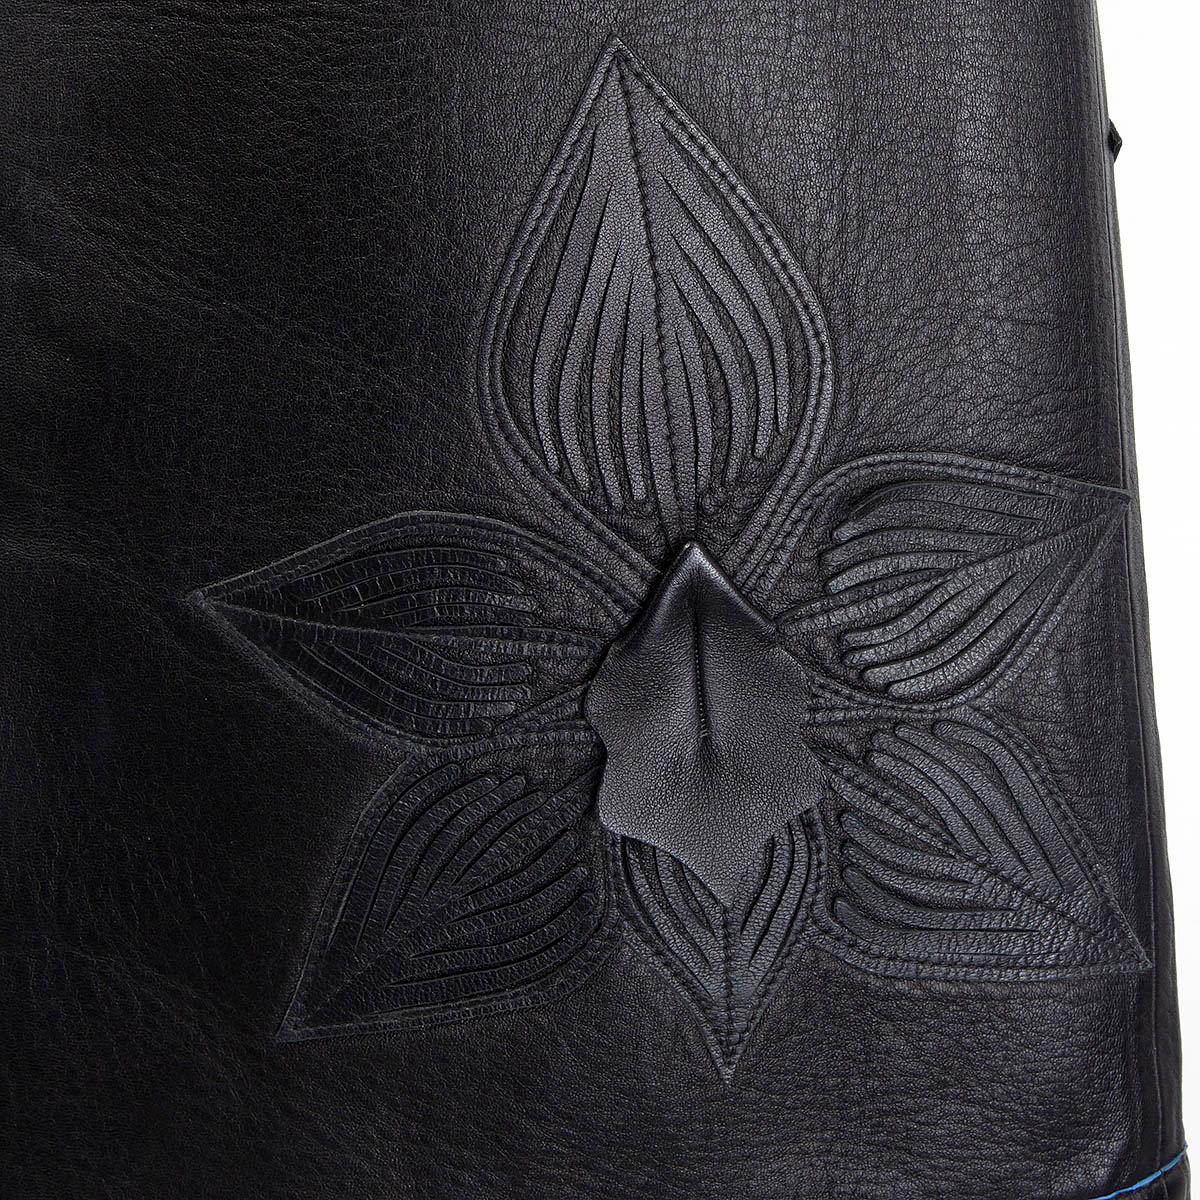 FENDI black leather FLORAL A-LINE Skirt 42 M 1